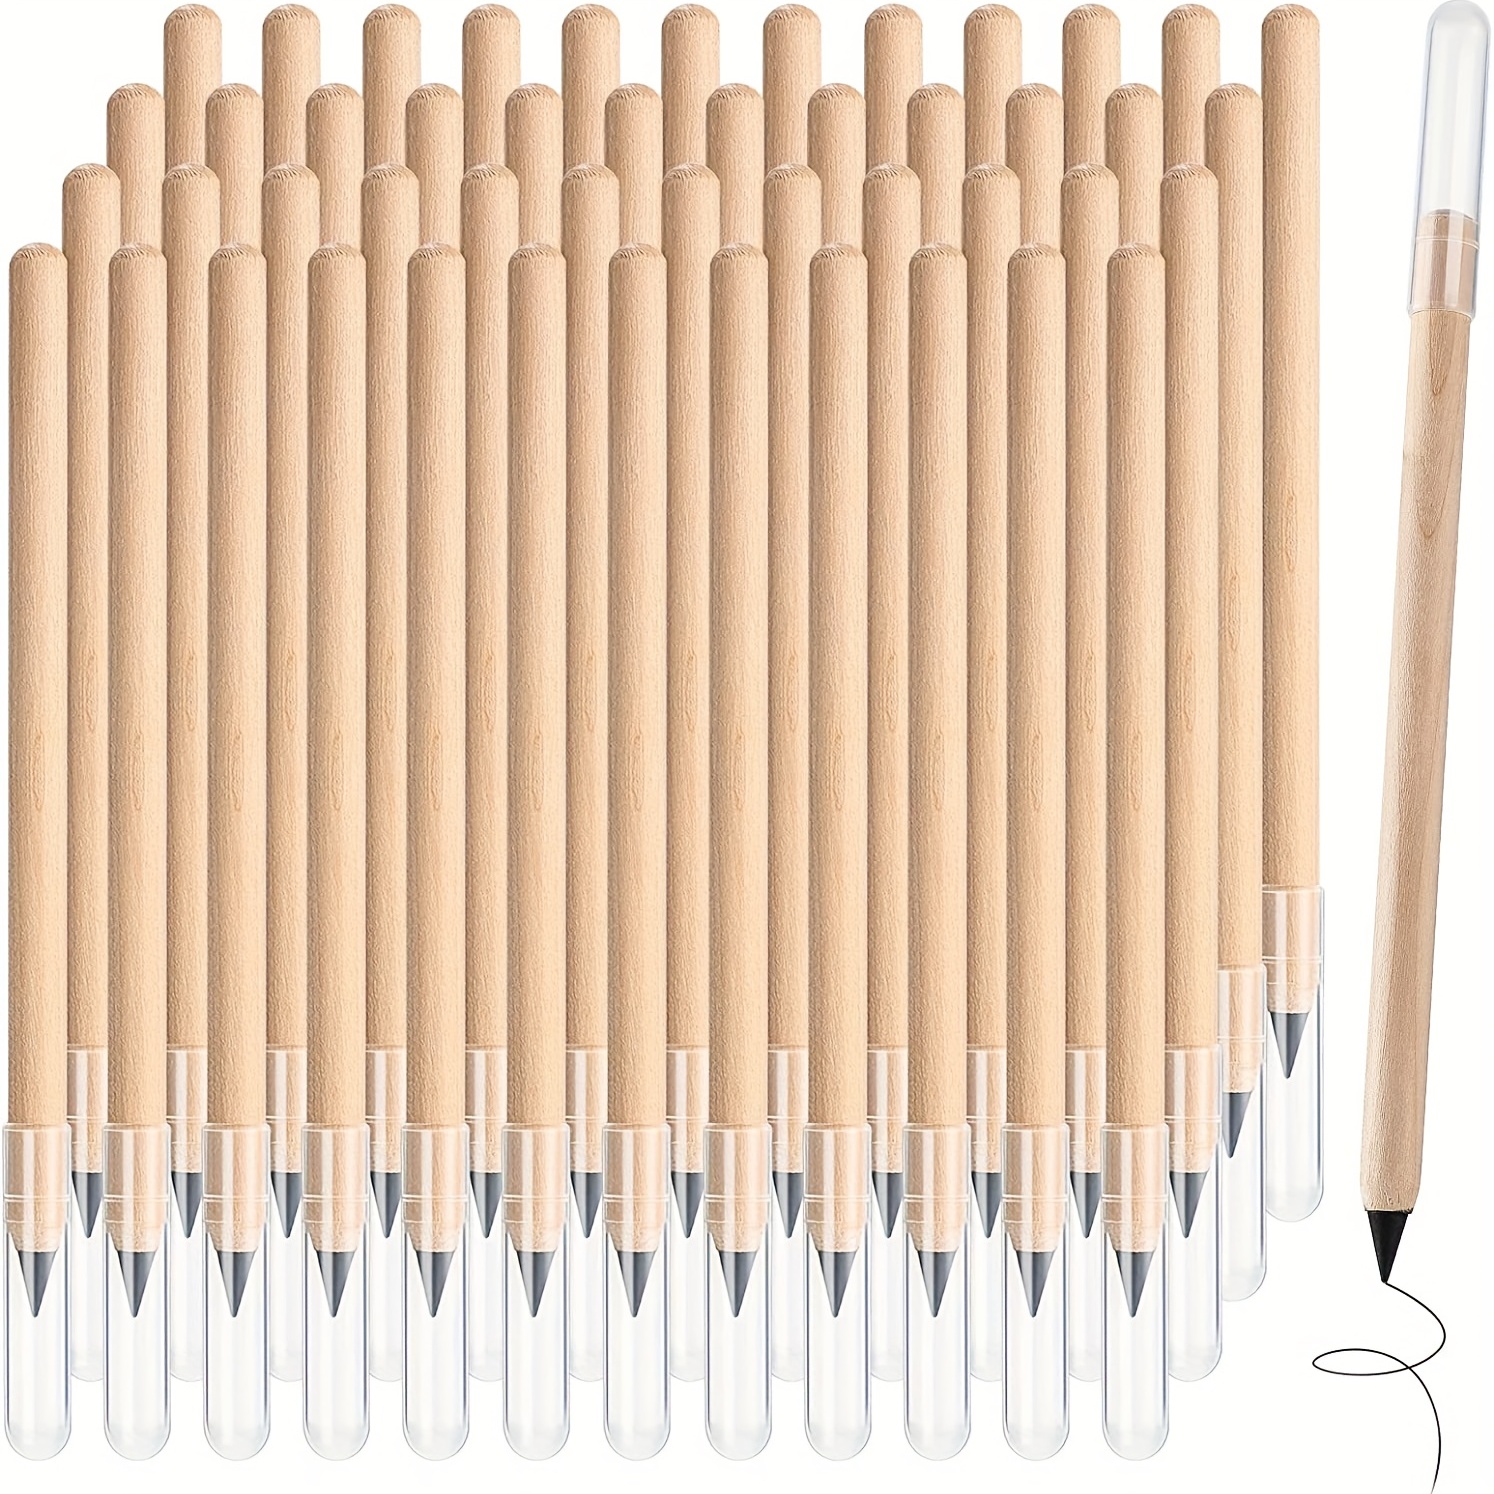 Wooden Inkless Pencil Everlasting Pencils, Reusable Infinite